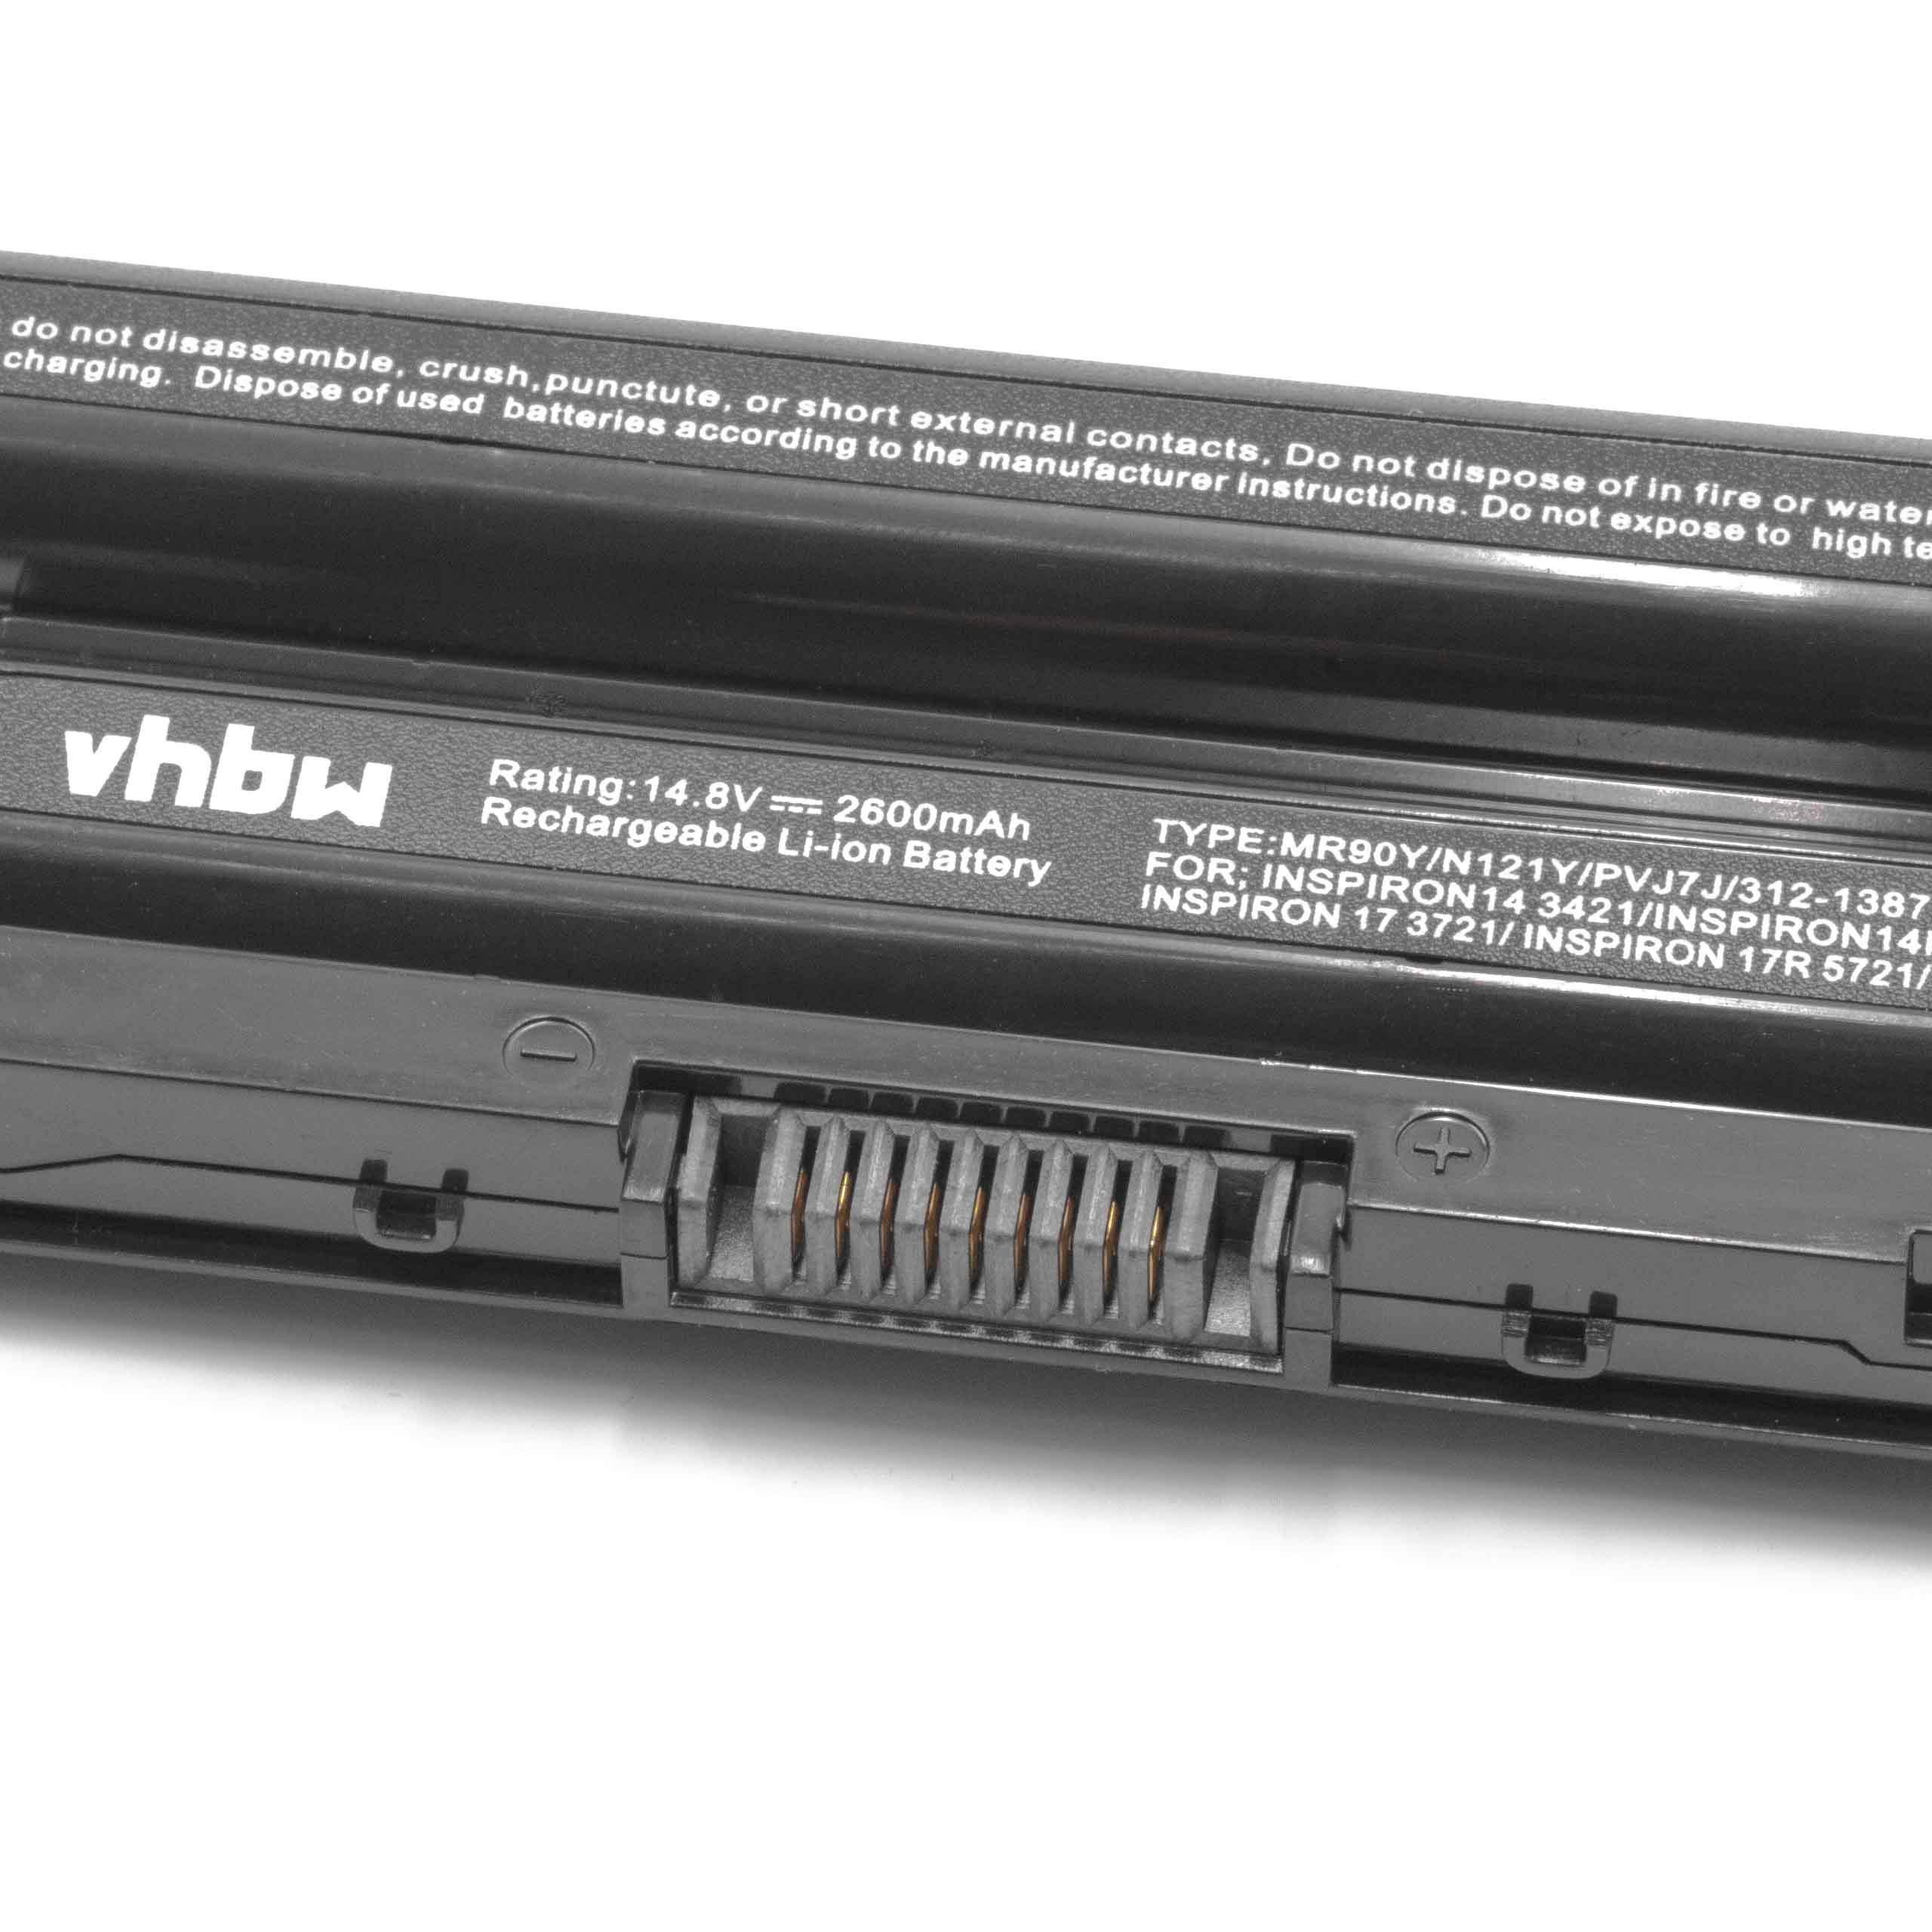 vhbw passend für Vostro 14,8V, Netbook Li-Ion) mAh M3441D-1428R / Laptop-Akku Dell (2600mAh, Notebook 2600 Notebook / Notebook